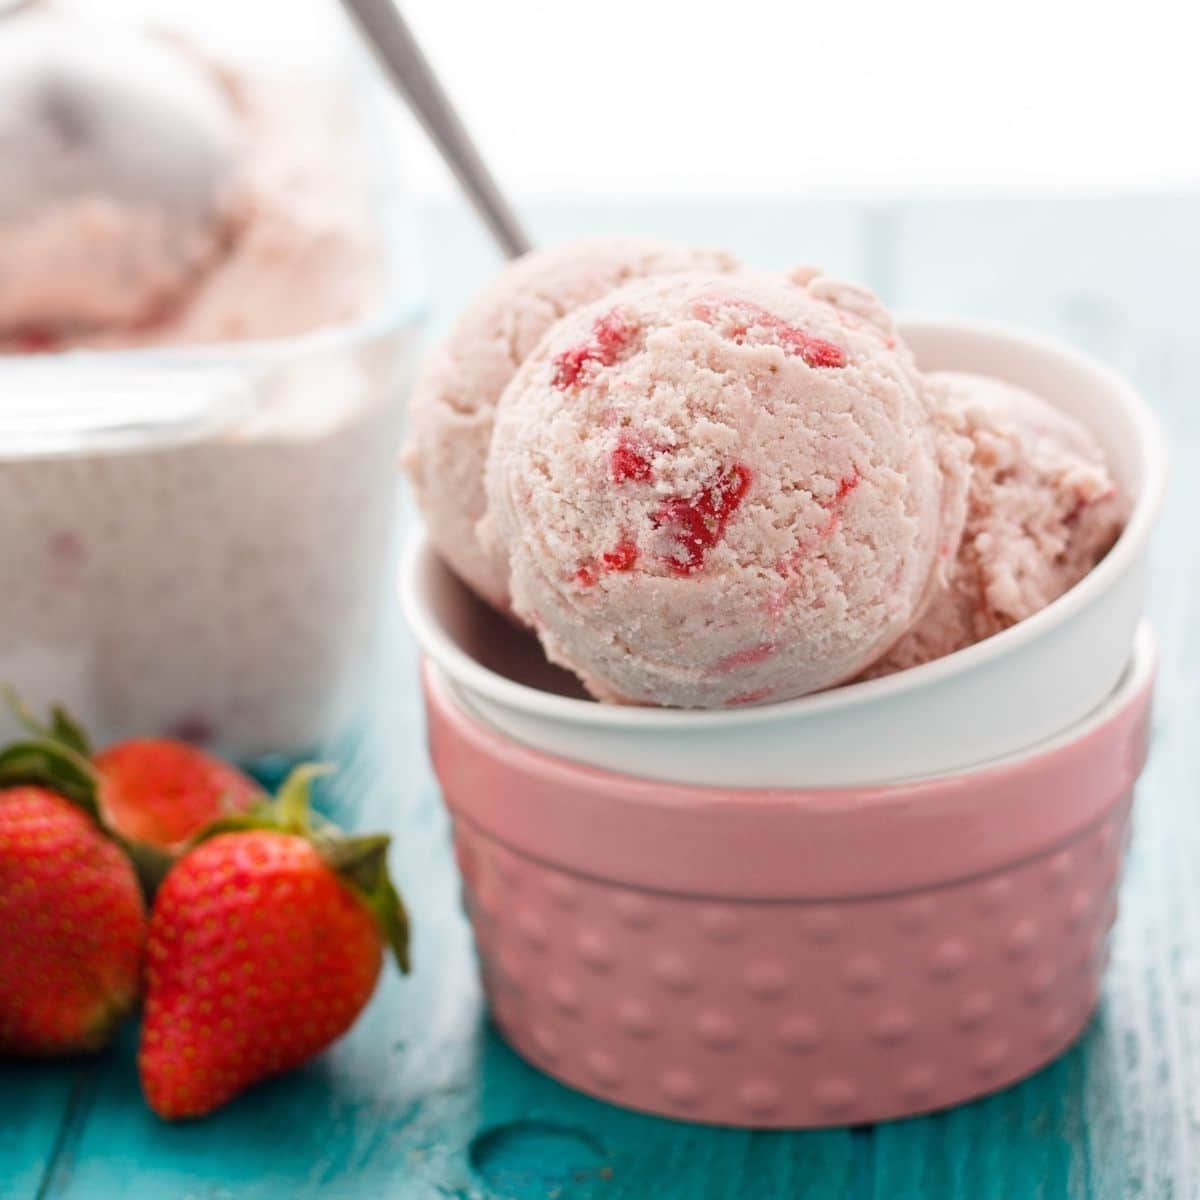 https://thecookiewriter.com/wp-content/uploads/2014/06/Strawberry-banana-ice-cream-featured.jpg